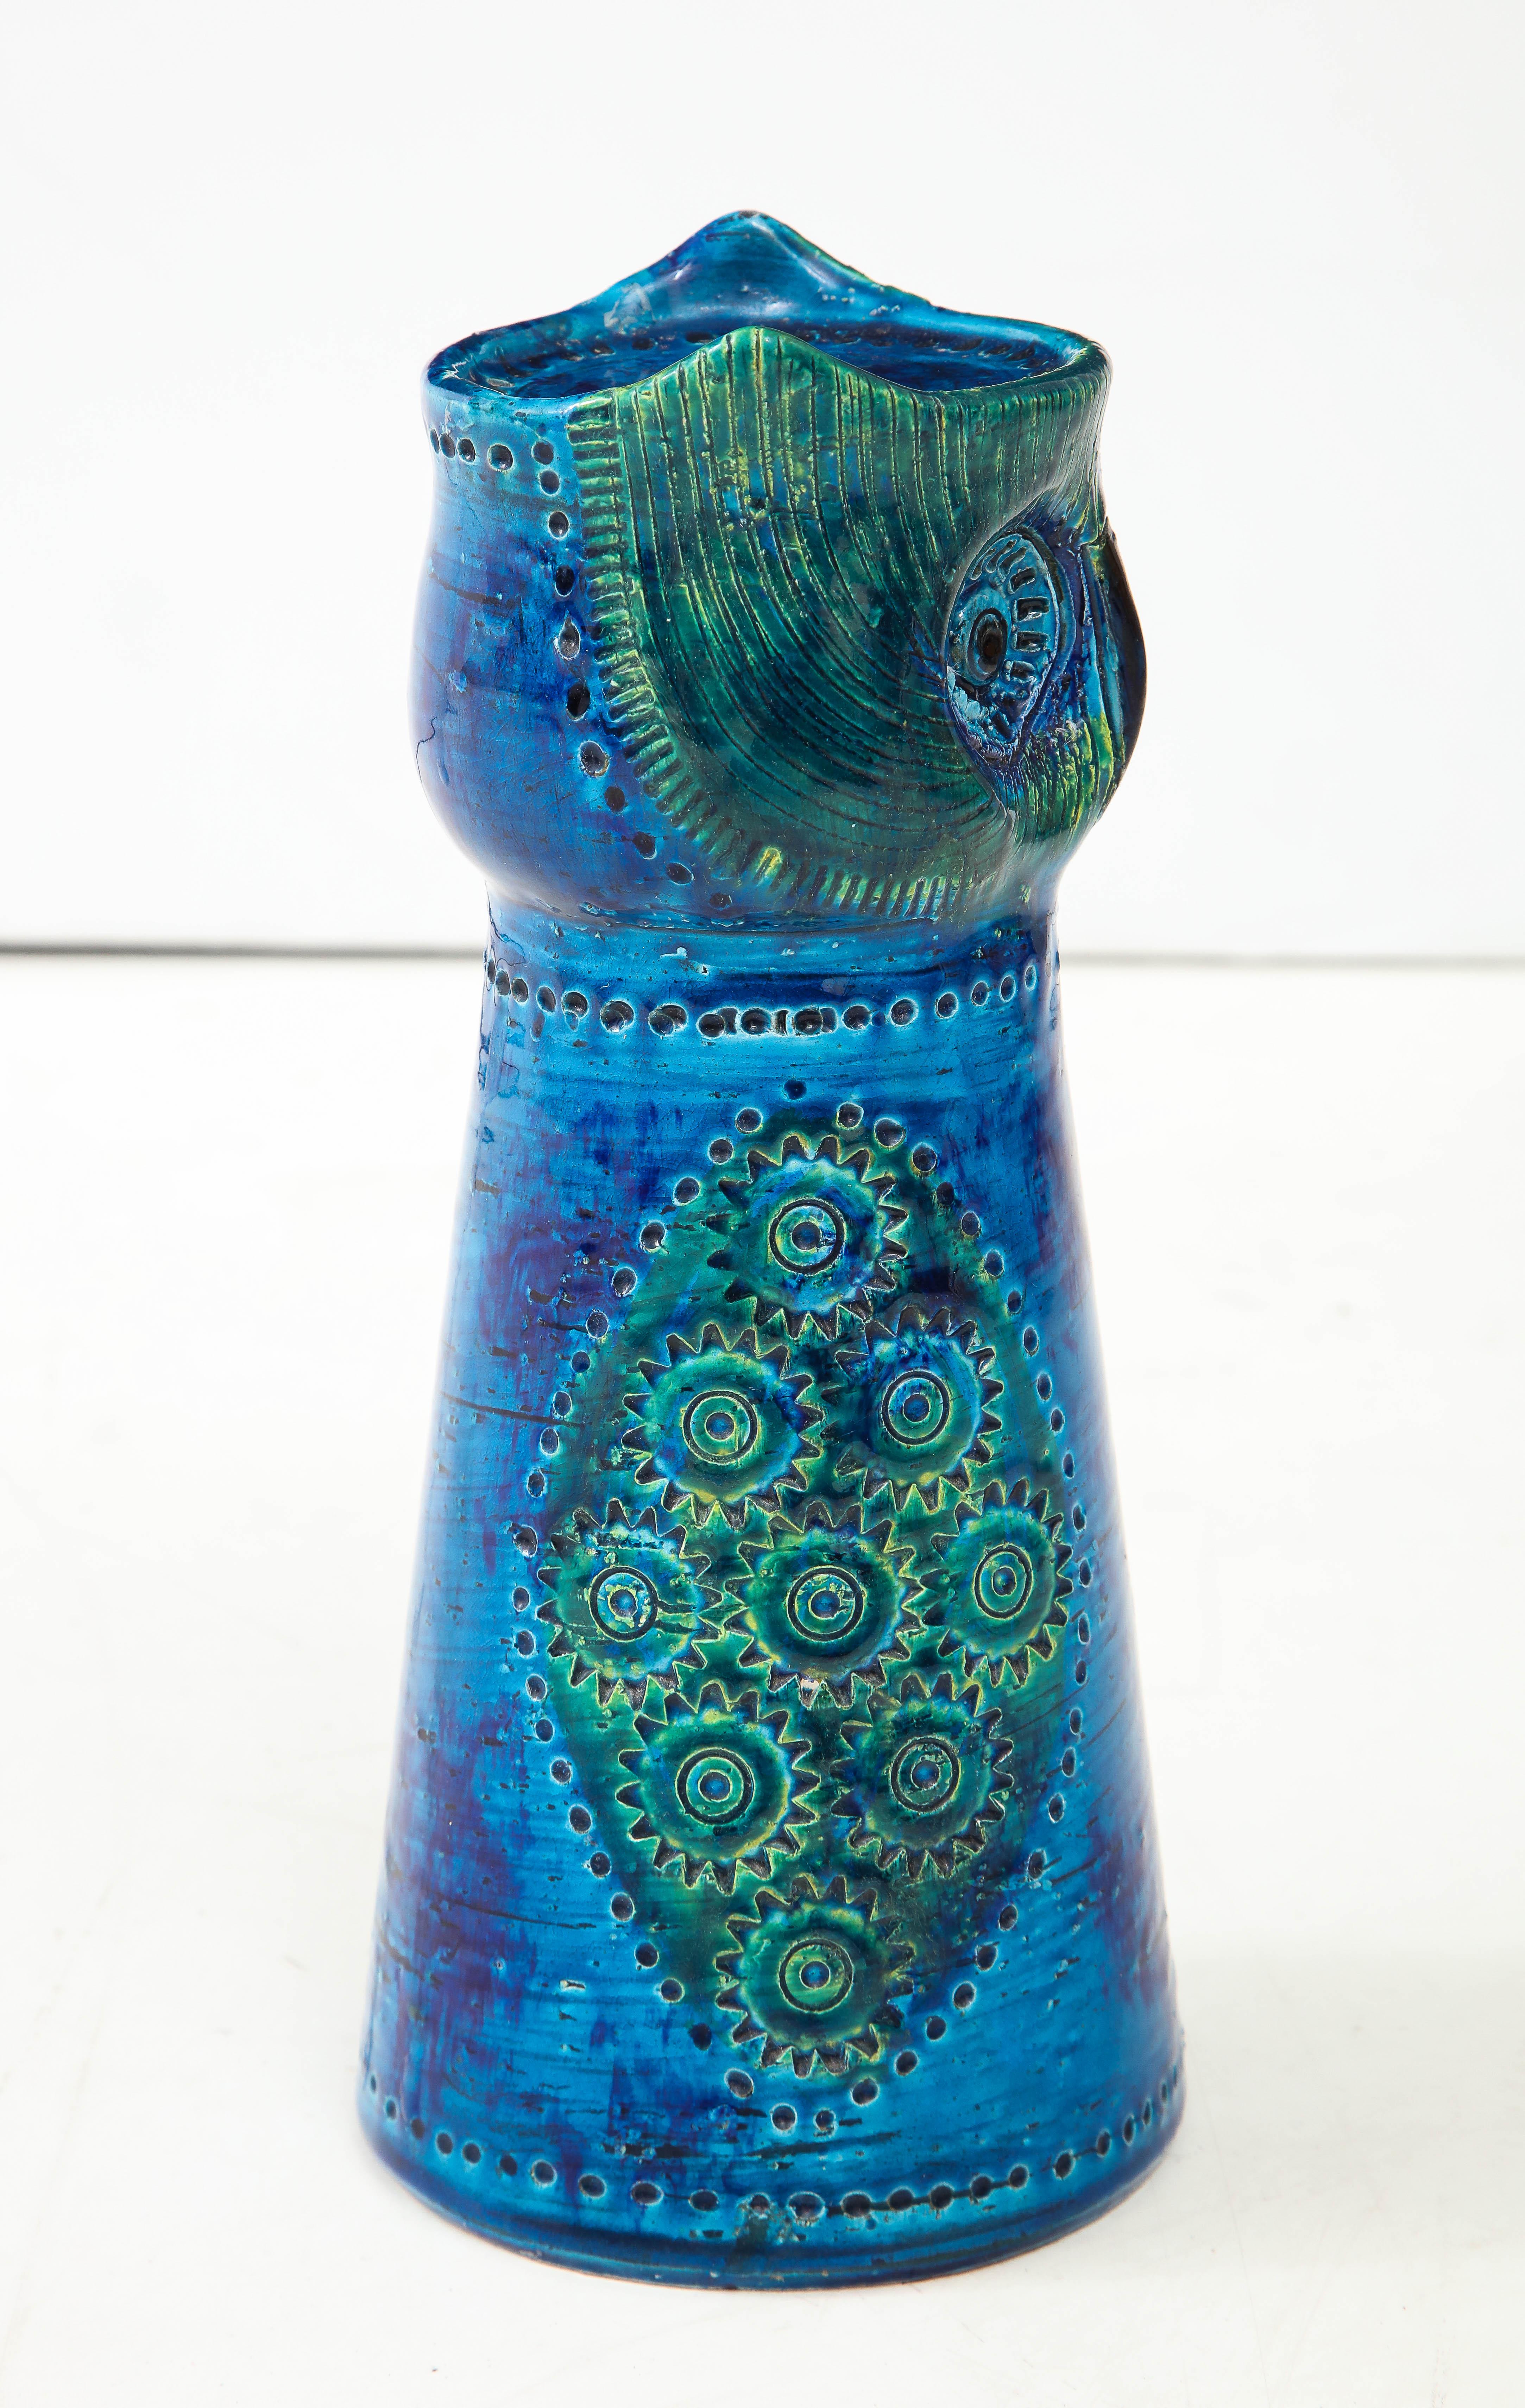 Aldo Londi for Bitossi Pottery Owl 1